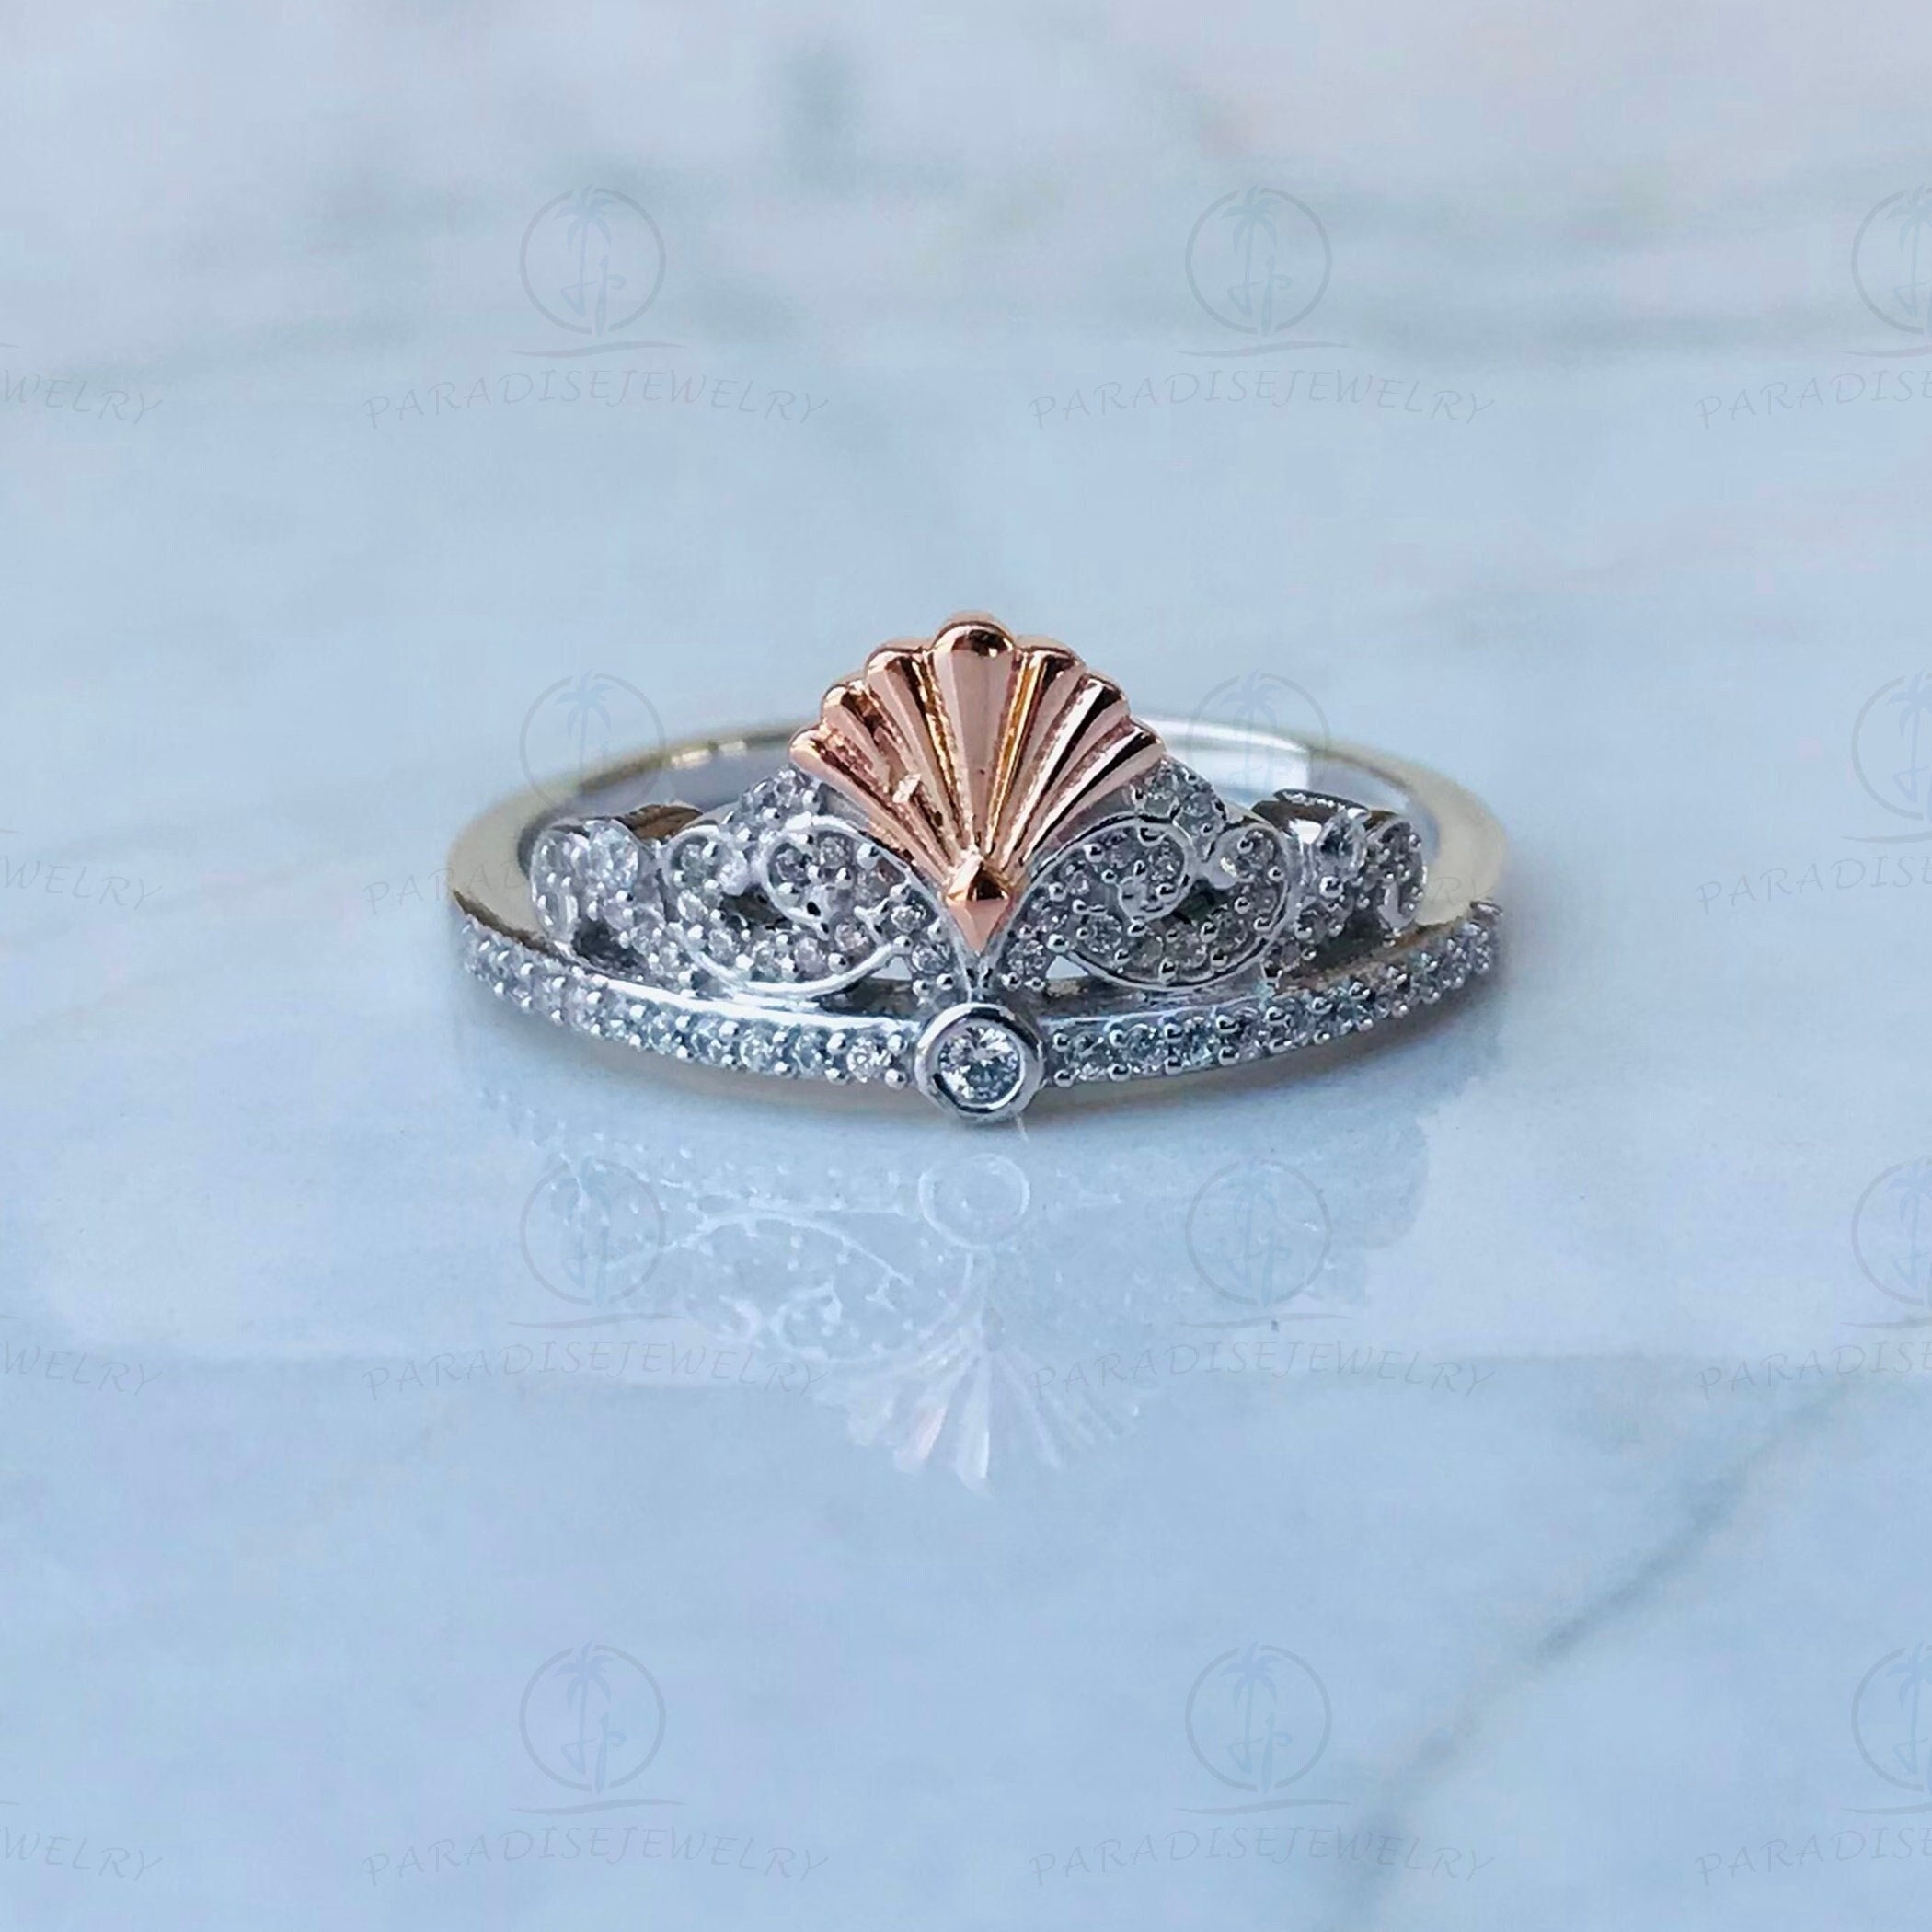 Amazon.com: Jewelili Enchanted Disney Fine Jewelry 10K White And Rose Gold  1/5 Cttw Diamond Belle Rose Ring, Size 5: Clothing, Shoes & Jewelry